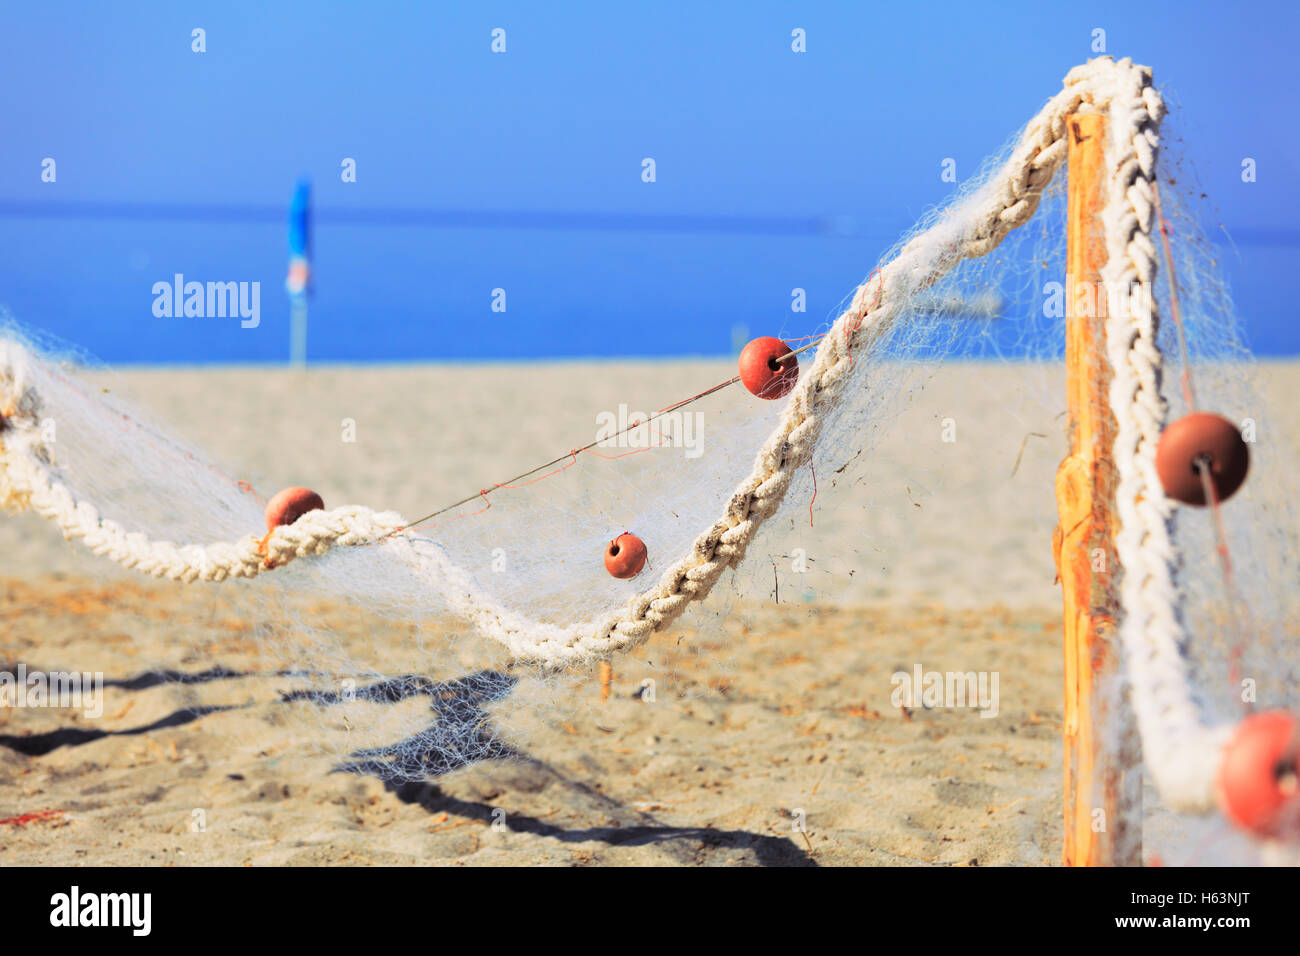 Drying fish net near the sea. Candid shot Stock Photo